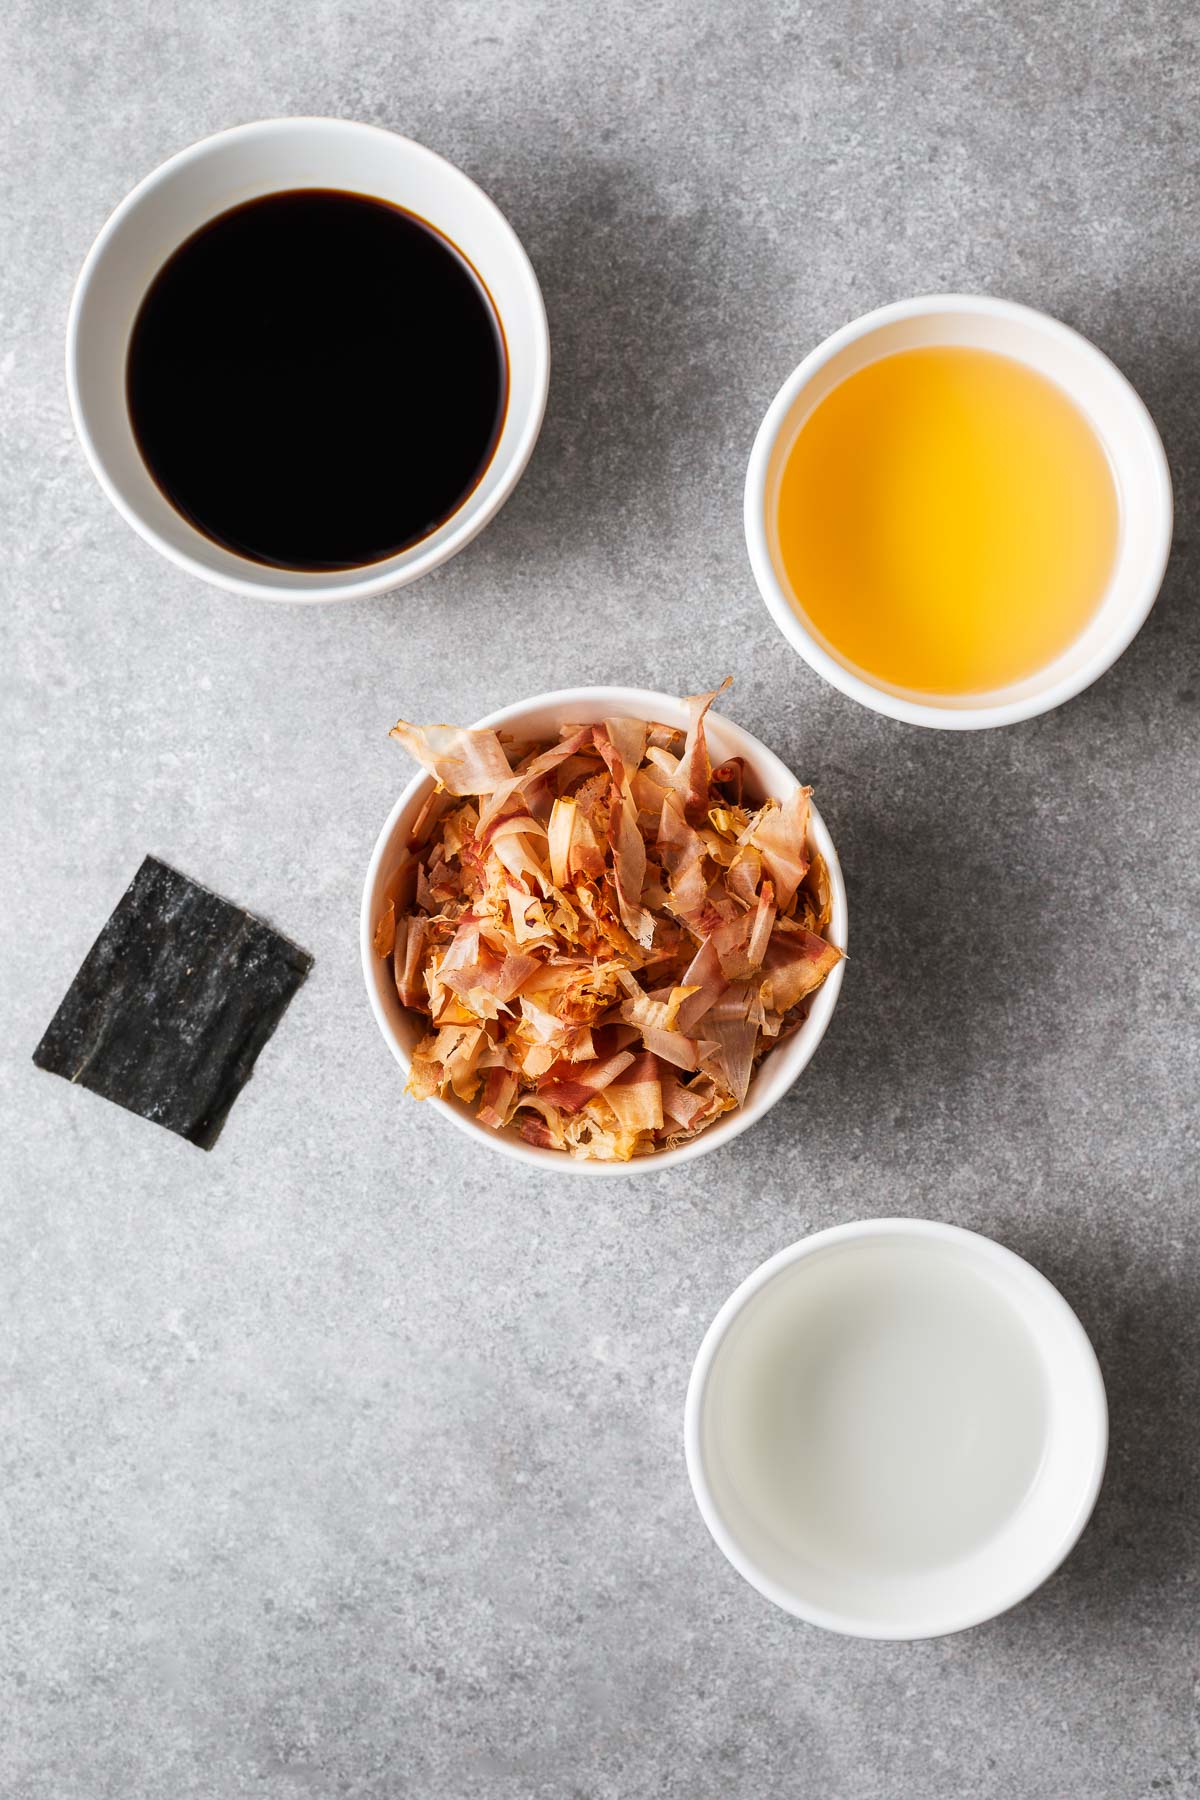 Ingredients for mentsuyu include bonito flakes (katsuobushi), kombu (dried kelp), mirin and sake.